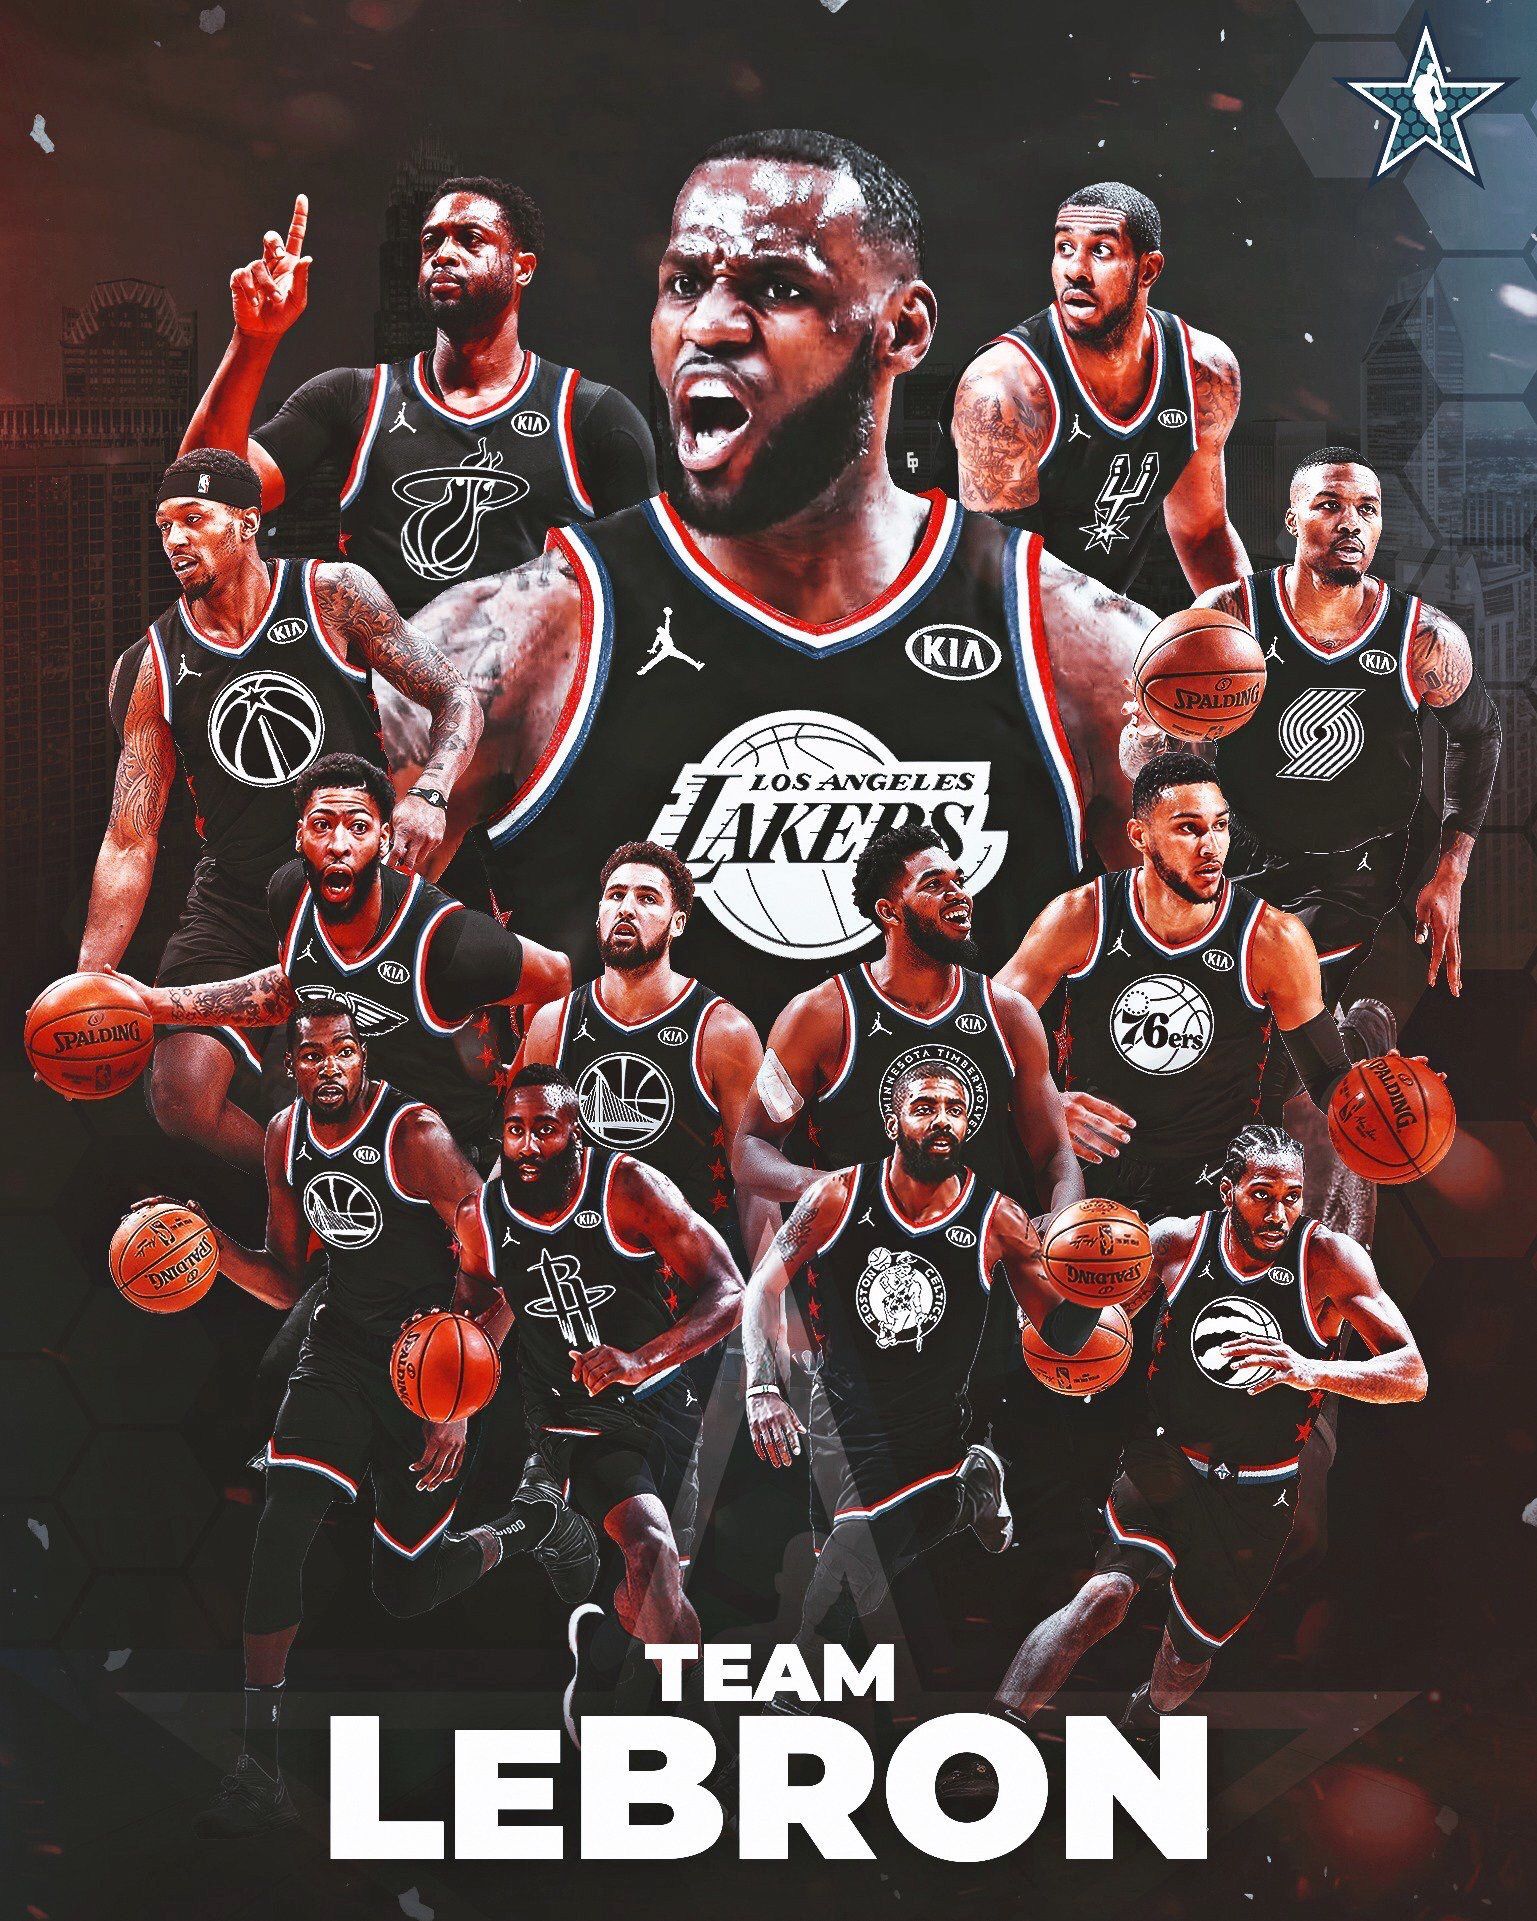 Team LeBron Vs Team Giannis / 2019 NBA All Star Game. Nba Basketball Art, Nba, Mvp Basketball